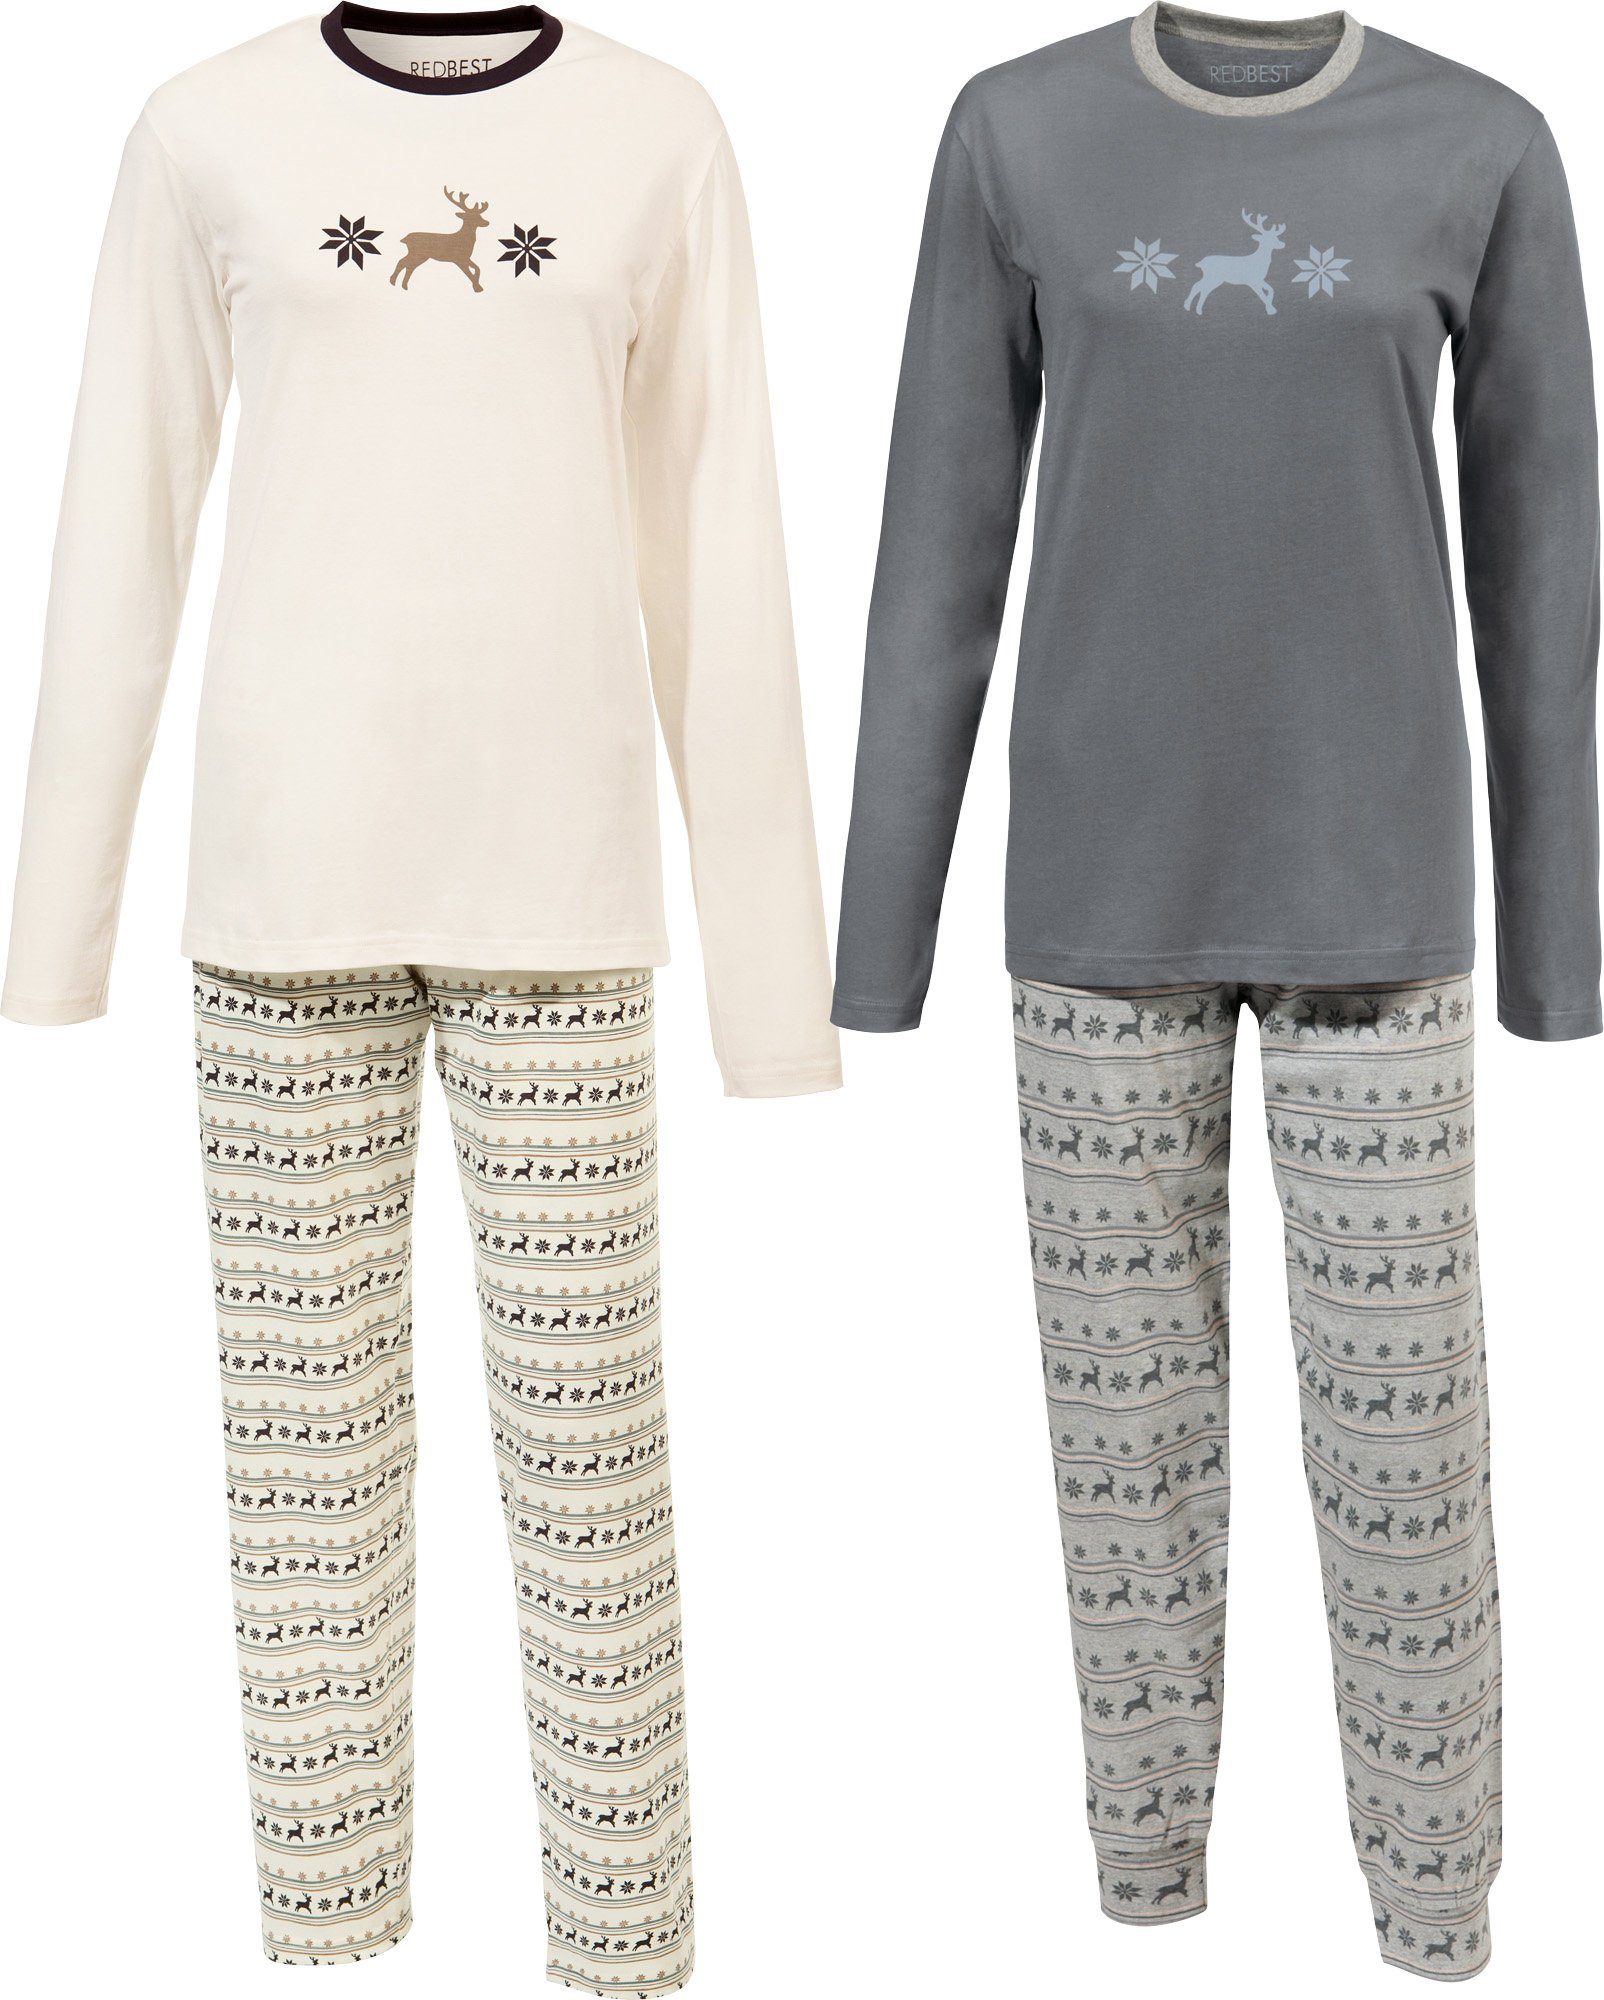 Pyjama Single-Jersey REDBEST Damen-Schlafanzug 2er-Pack gemustert